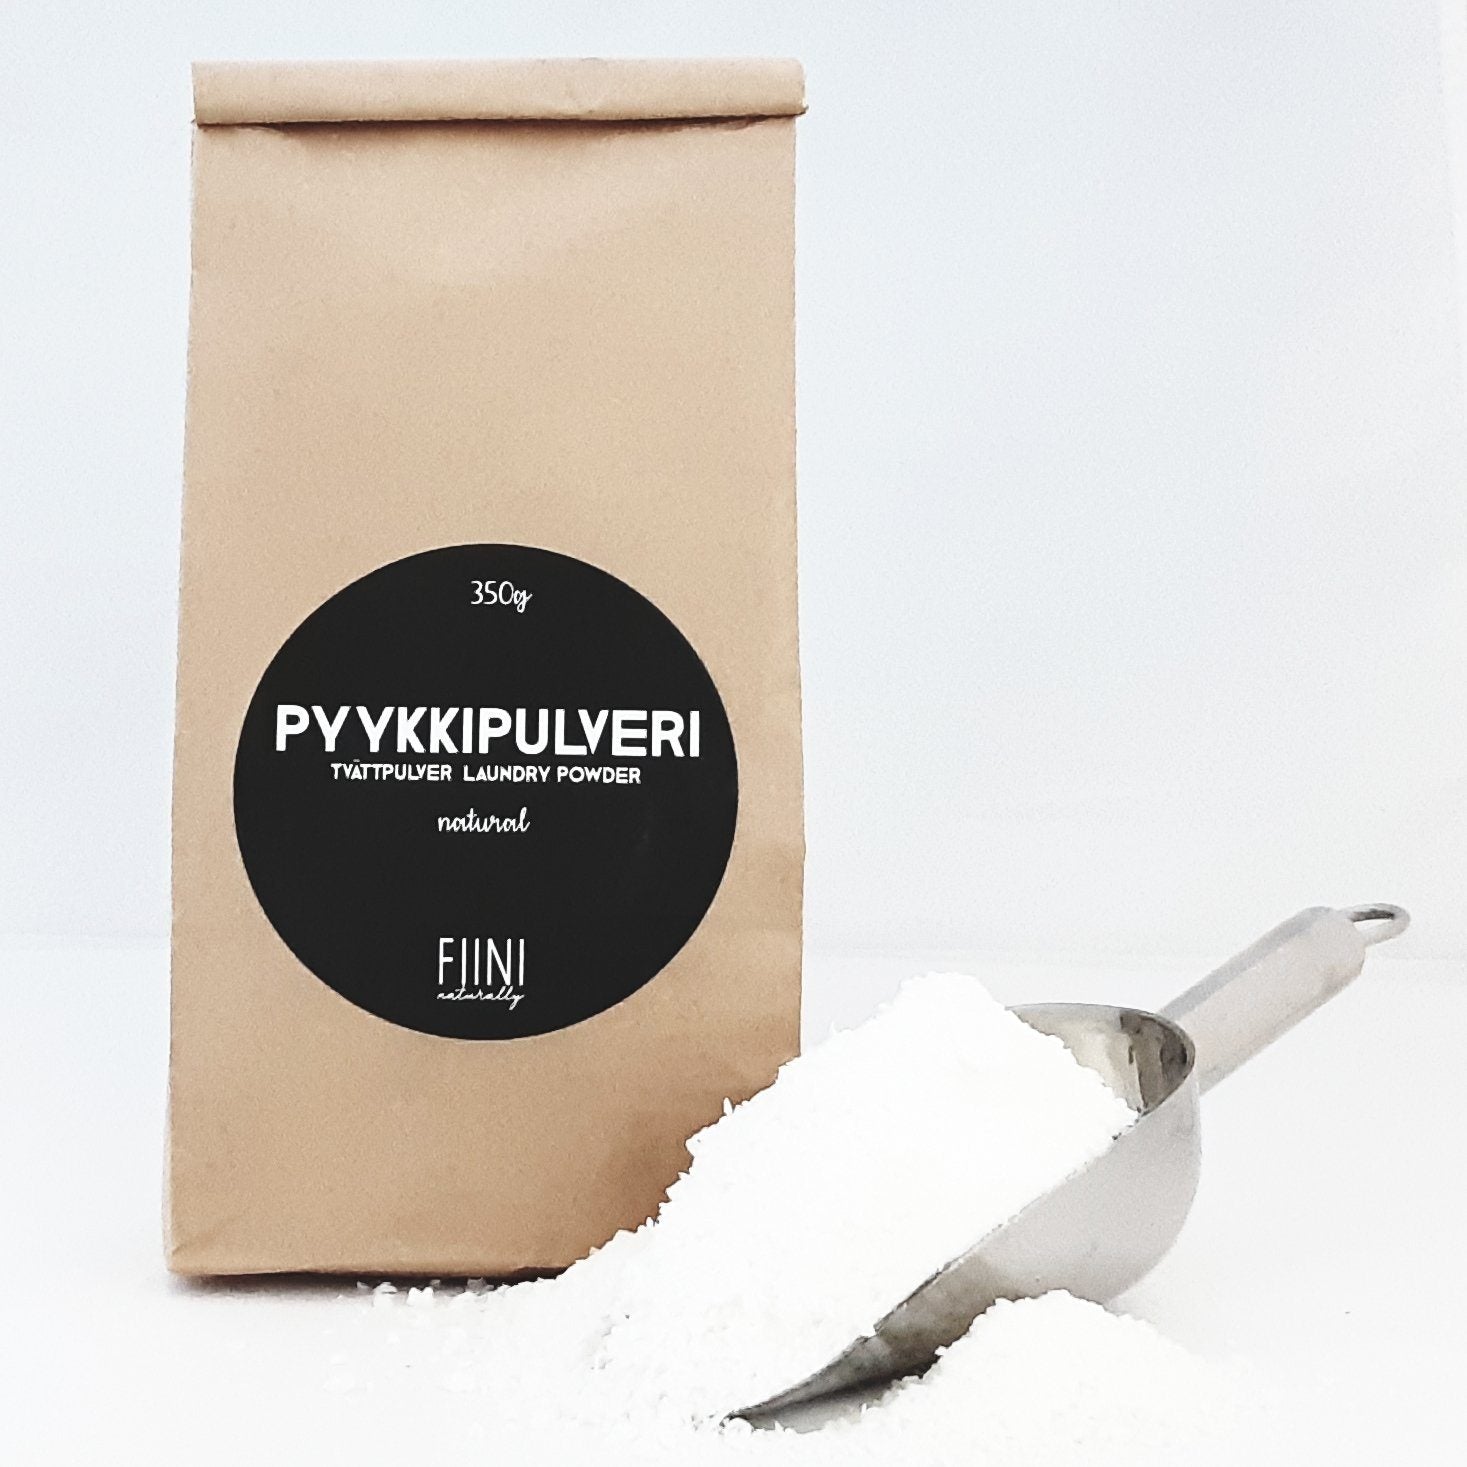 Fiini - Powder Laundry Detergent, 350 g - Weekendbee - sustainable sportswear